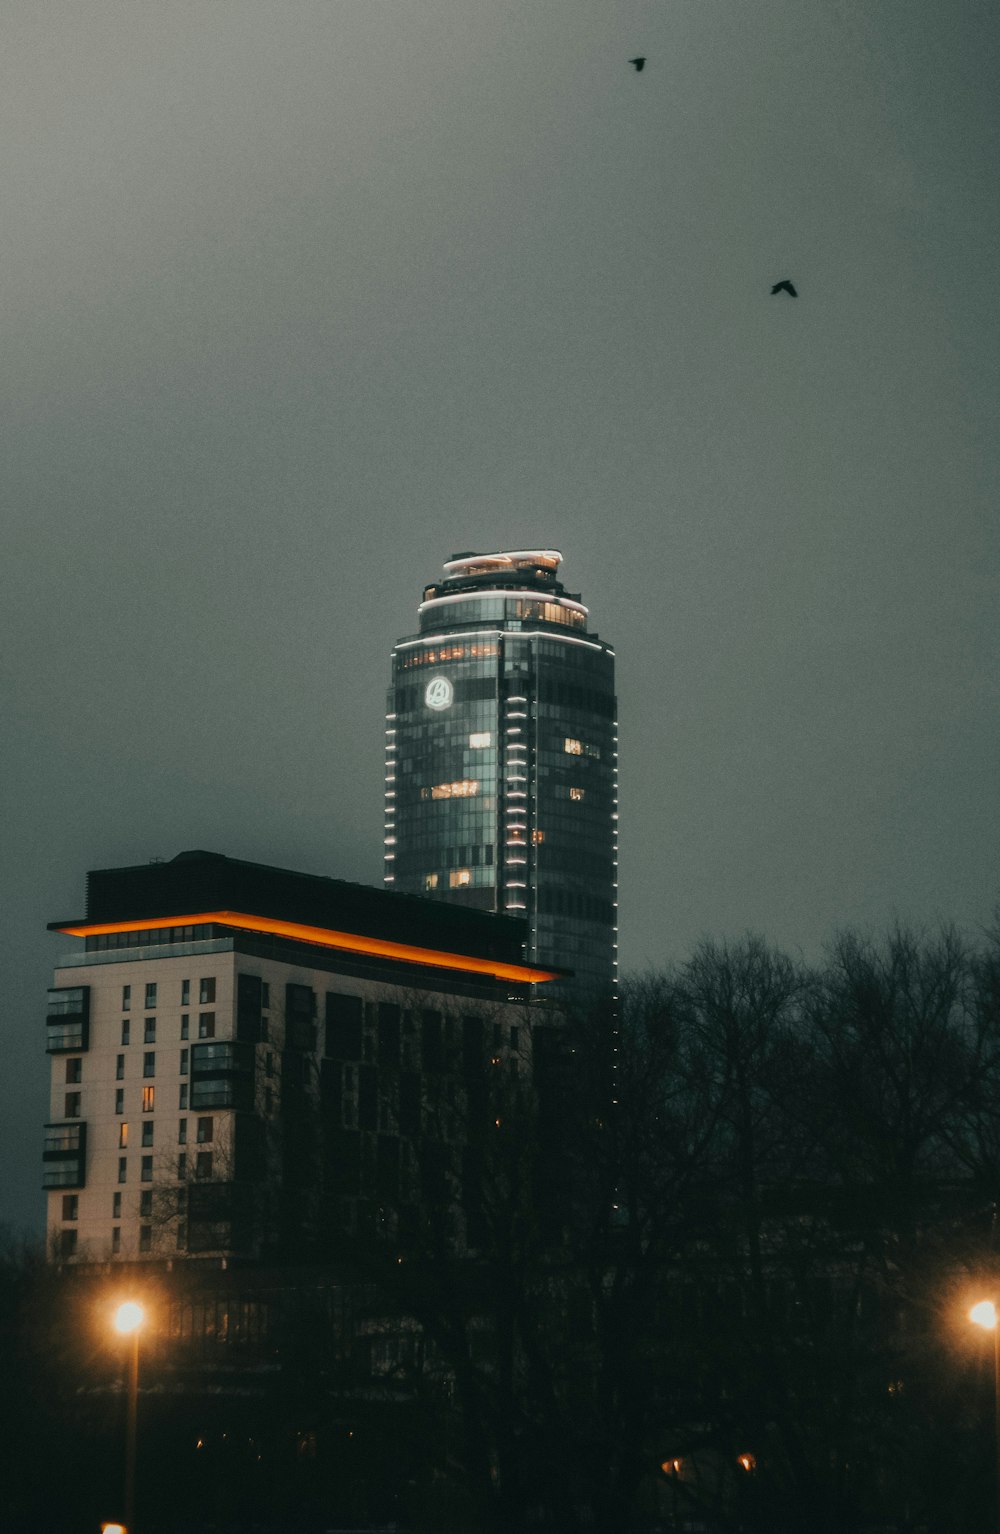 a tall building sitting next to a street light